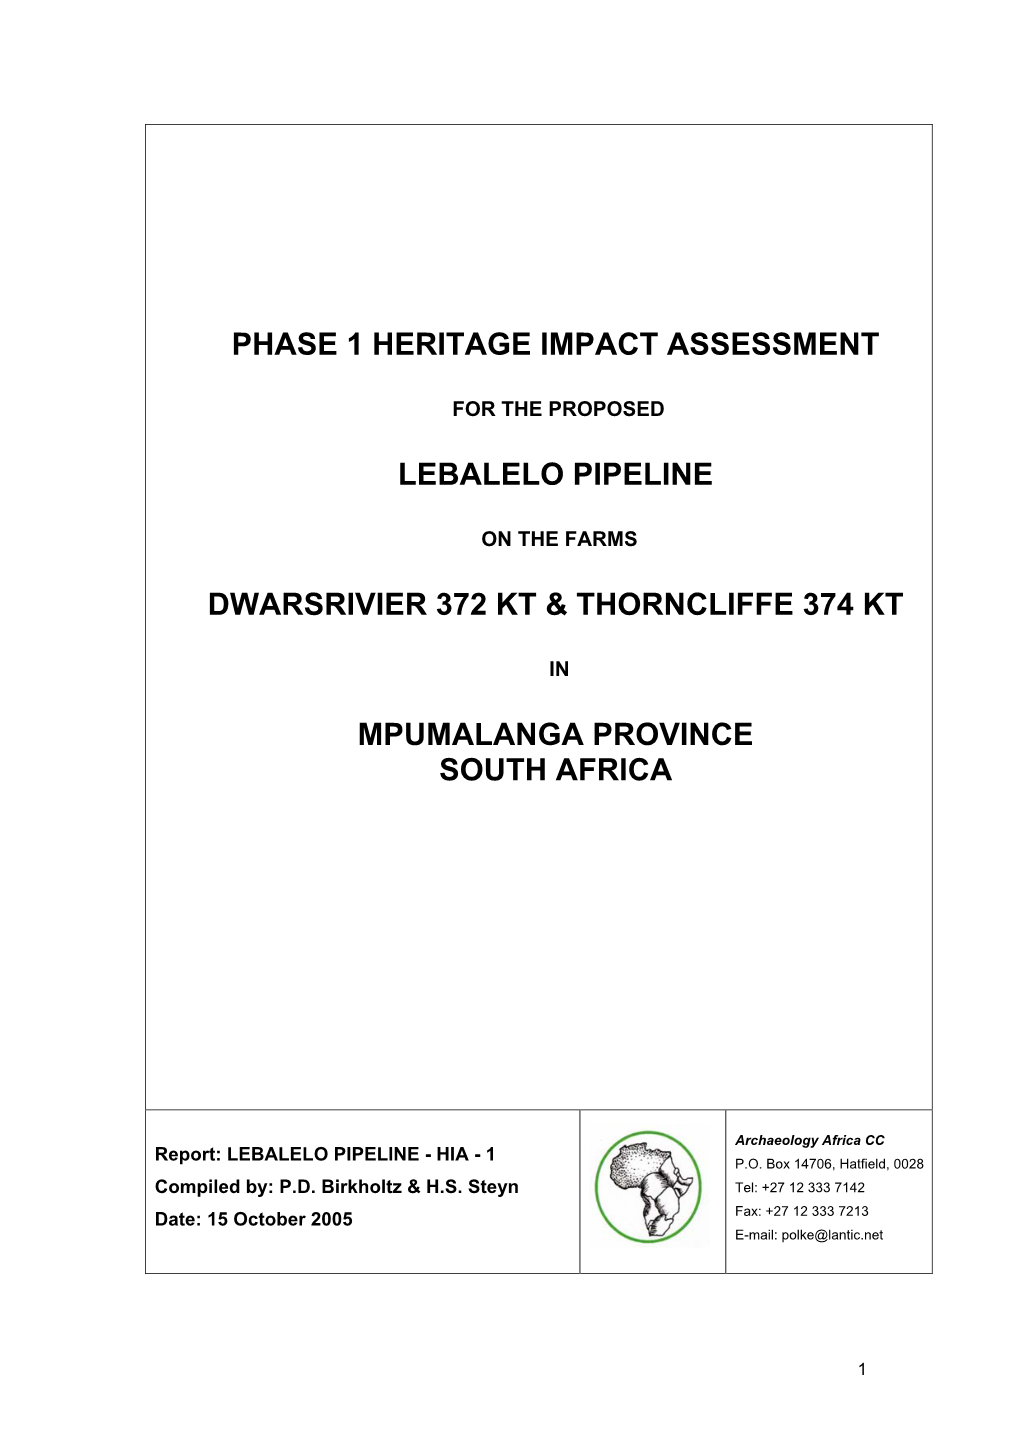 Phase 1 Heritage Impact Assessment Lebalelo